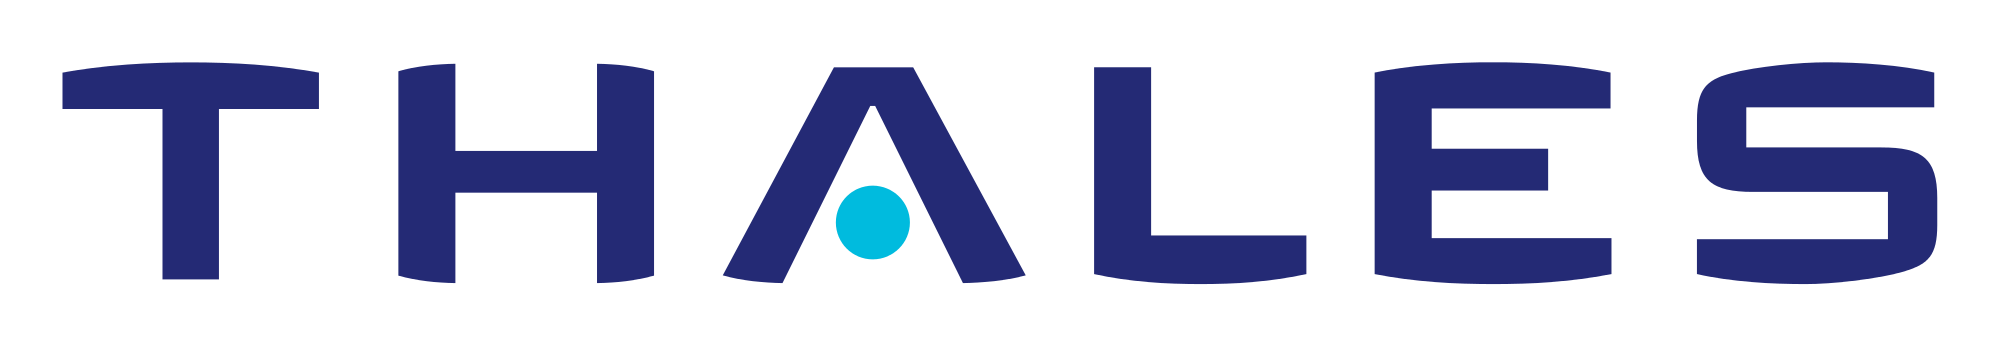 Logotipo de Thales